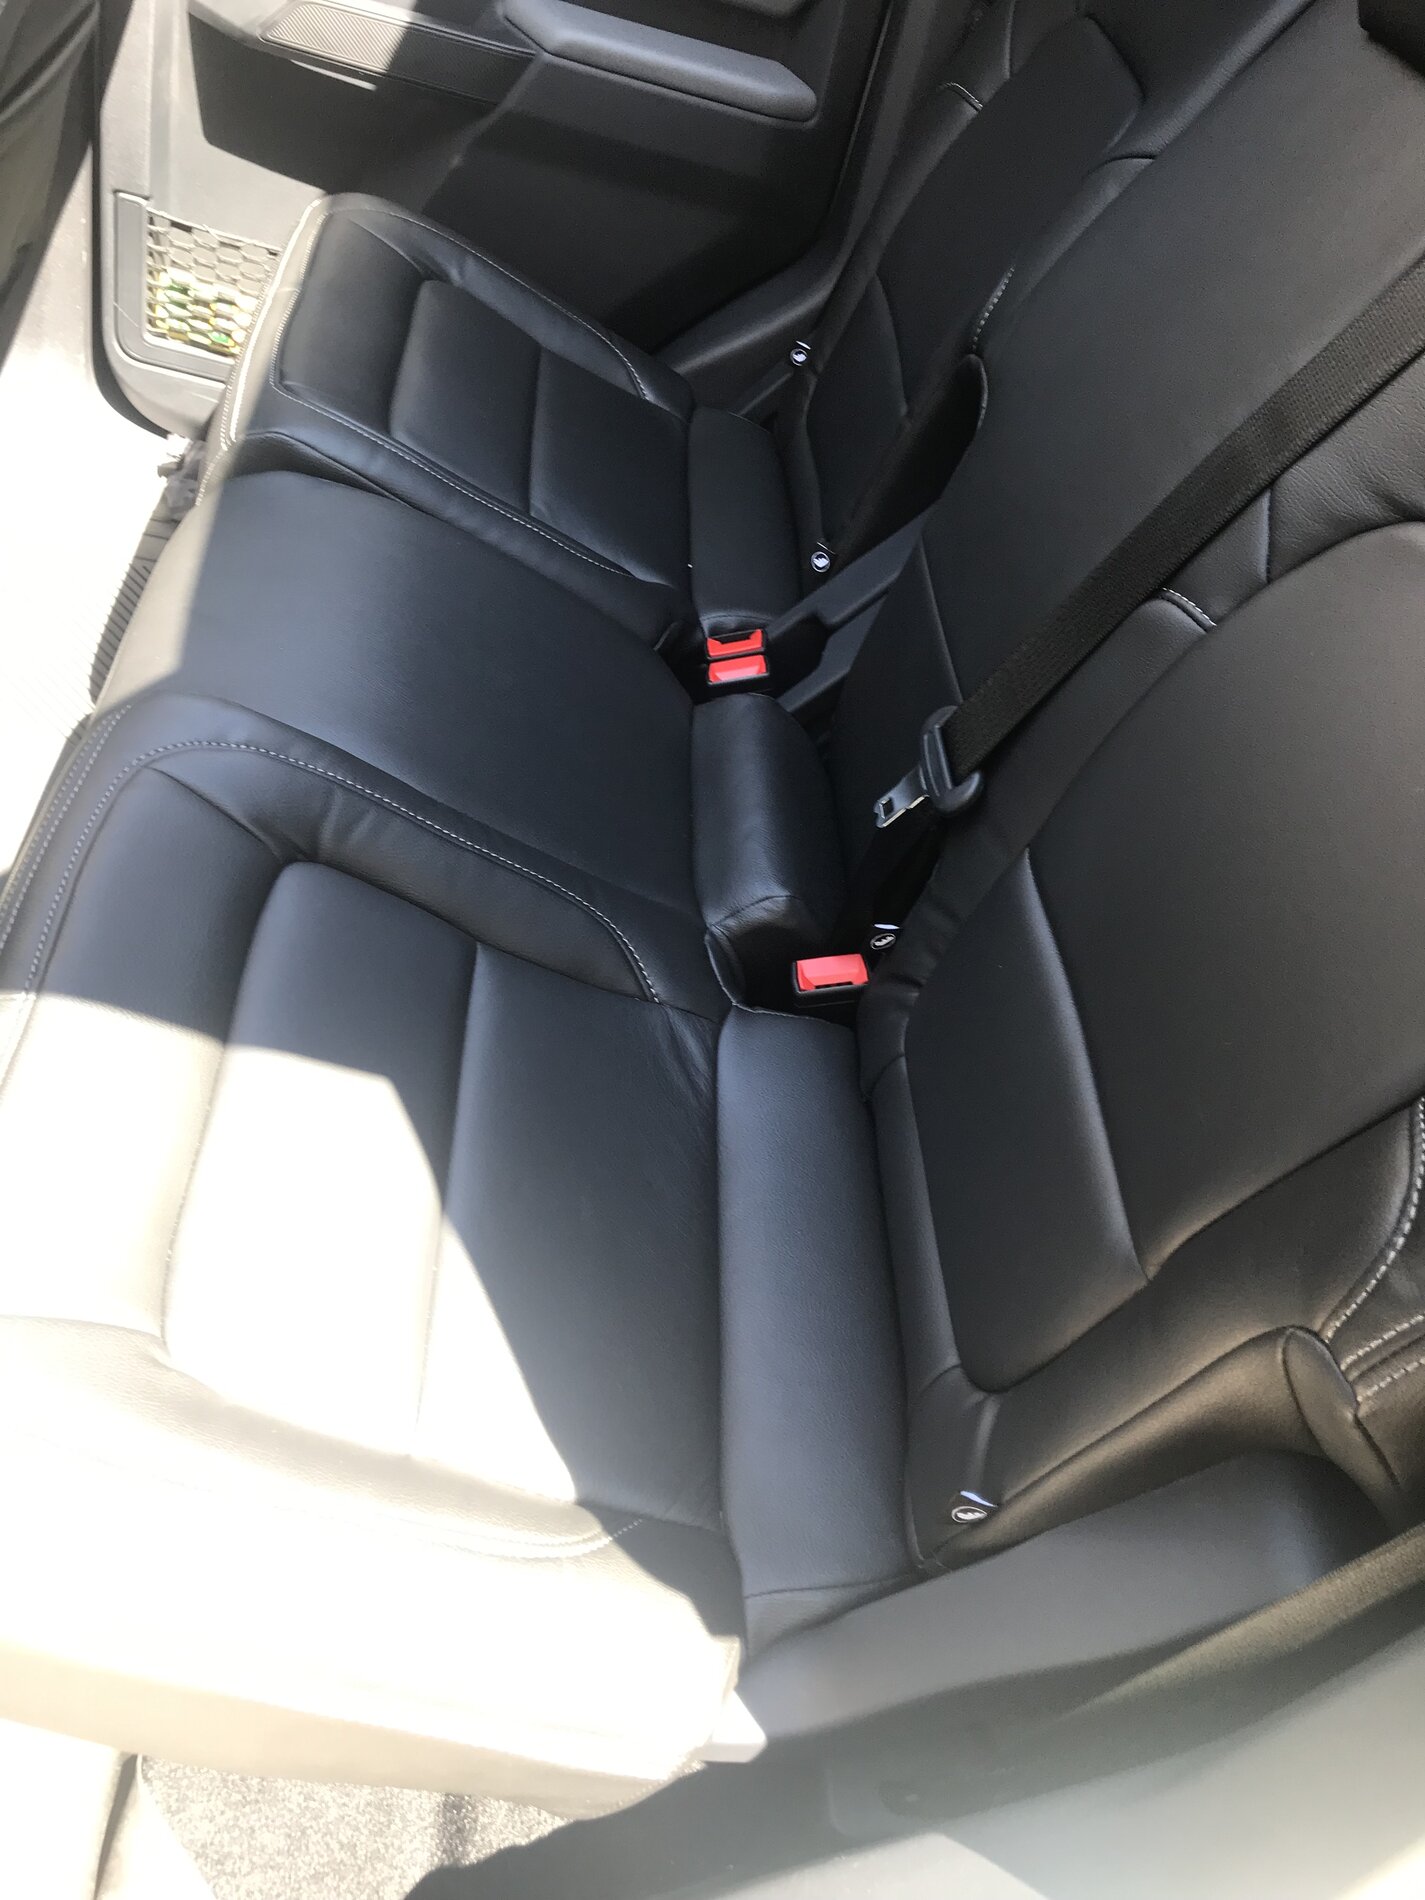 Ford Bronco Installed Katzkin custom leather seat covers in Big Bend interior 6601047E-44F0-4B68-9642-19A85EE41B0B